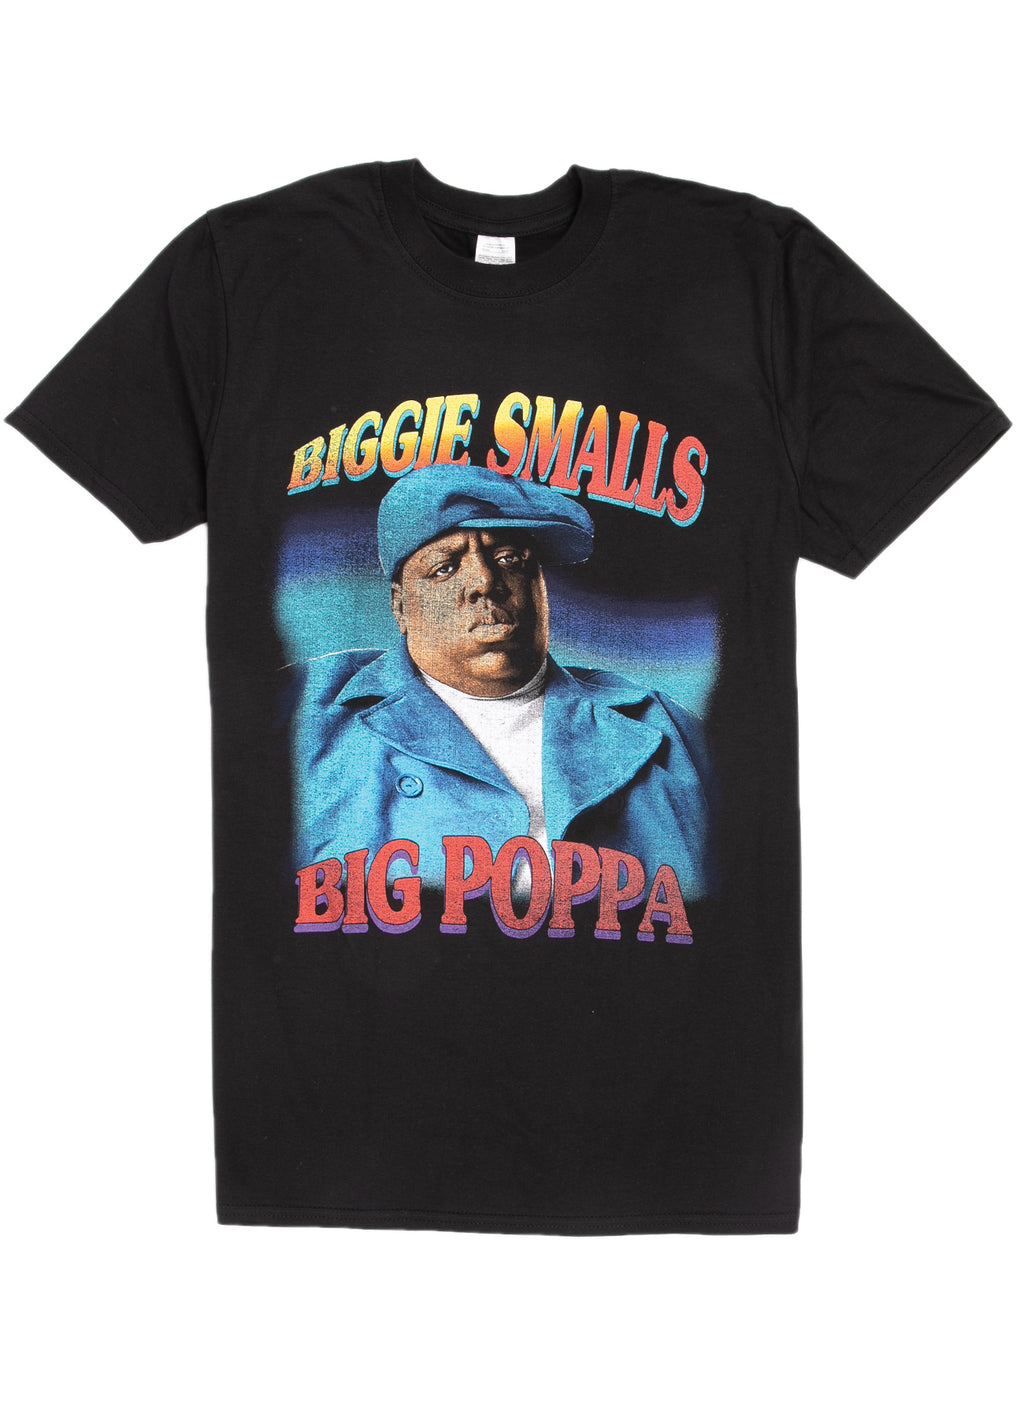 Biggie Smalls Shirt 